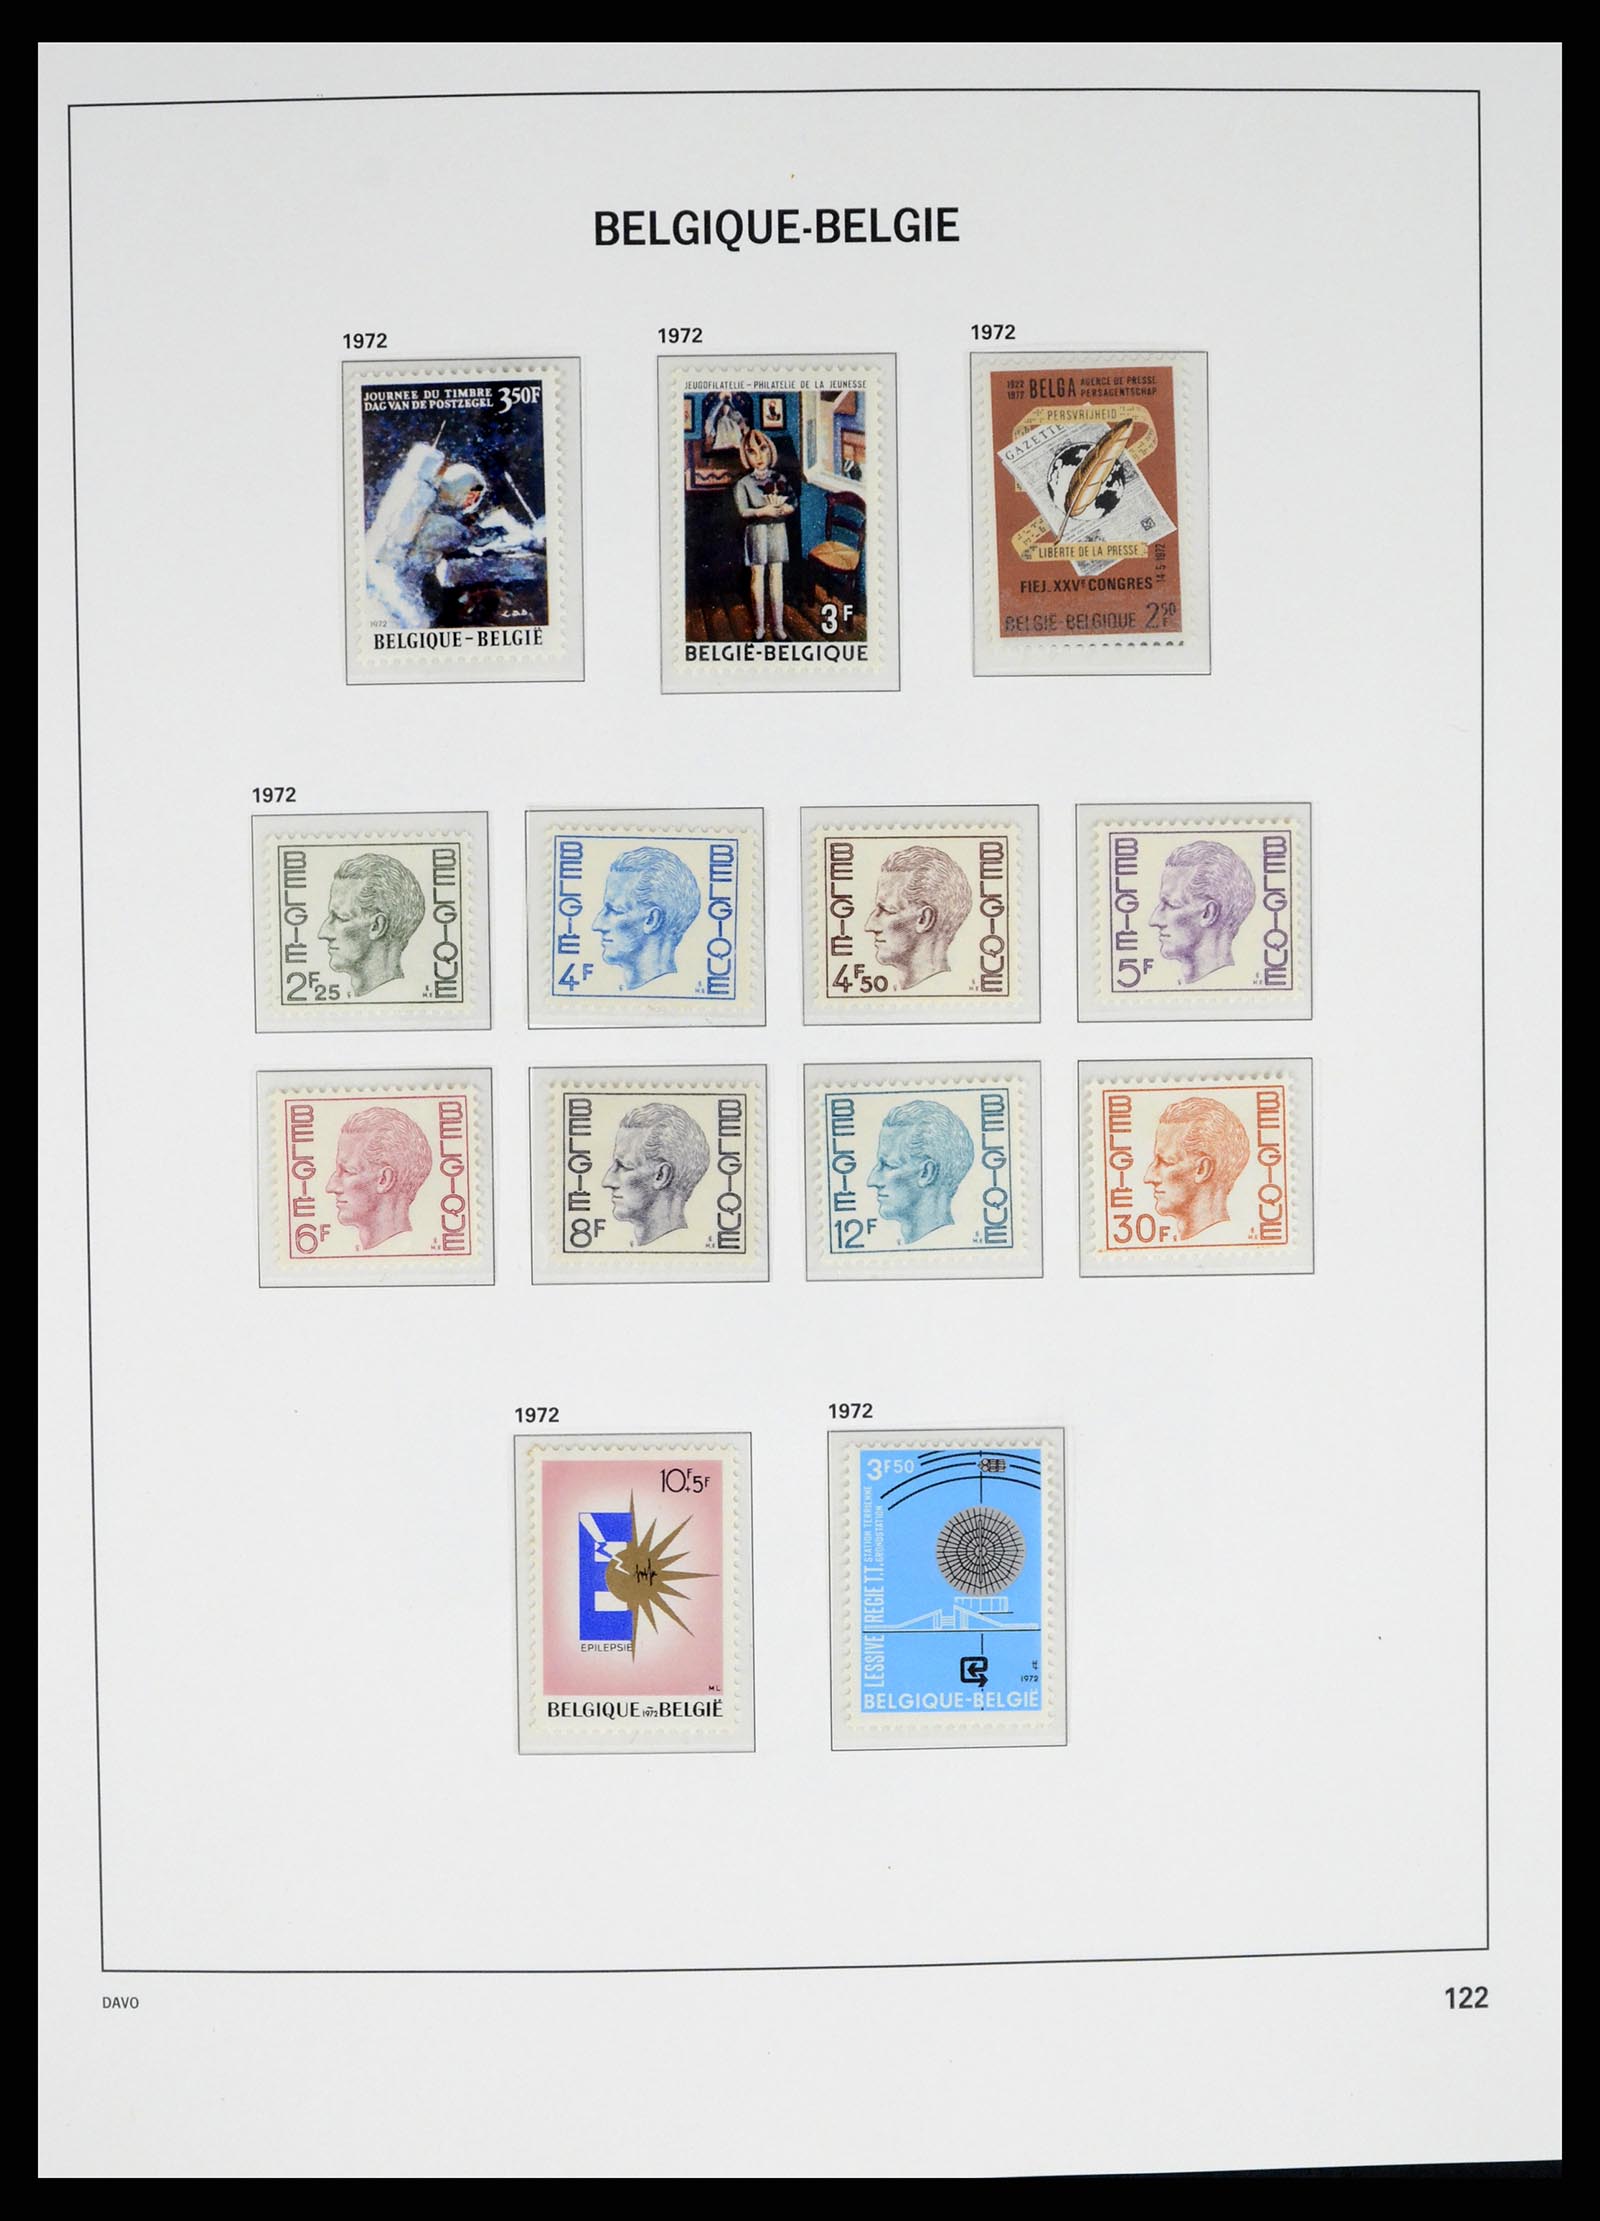 37368 011 - Stamp collection 37368 Belgium 1969-2003.